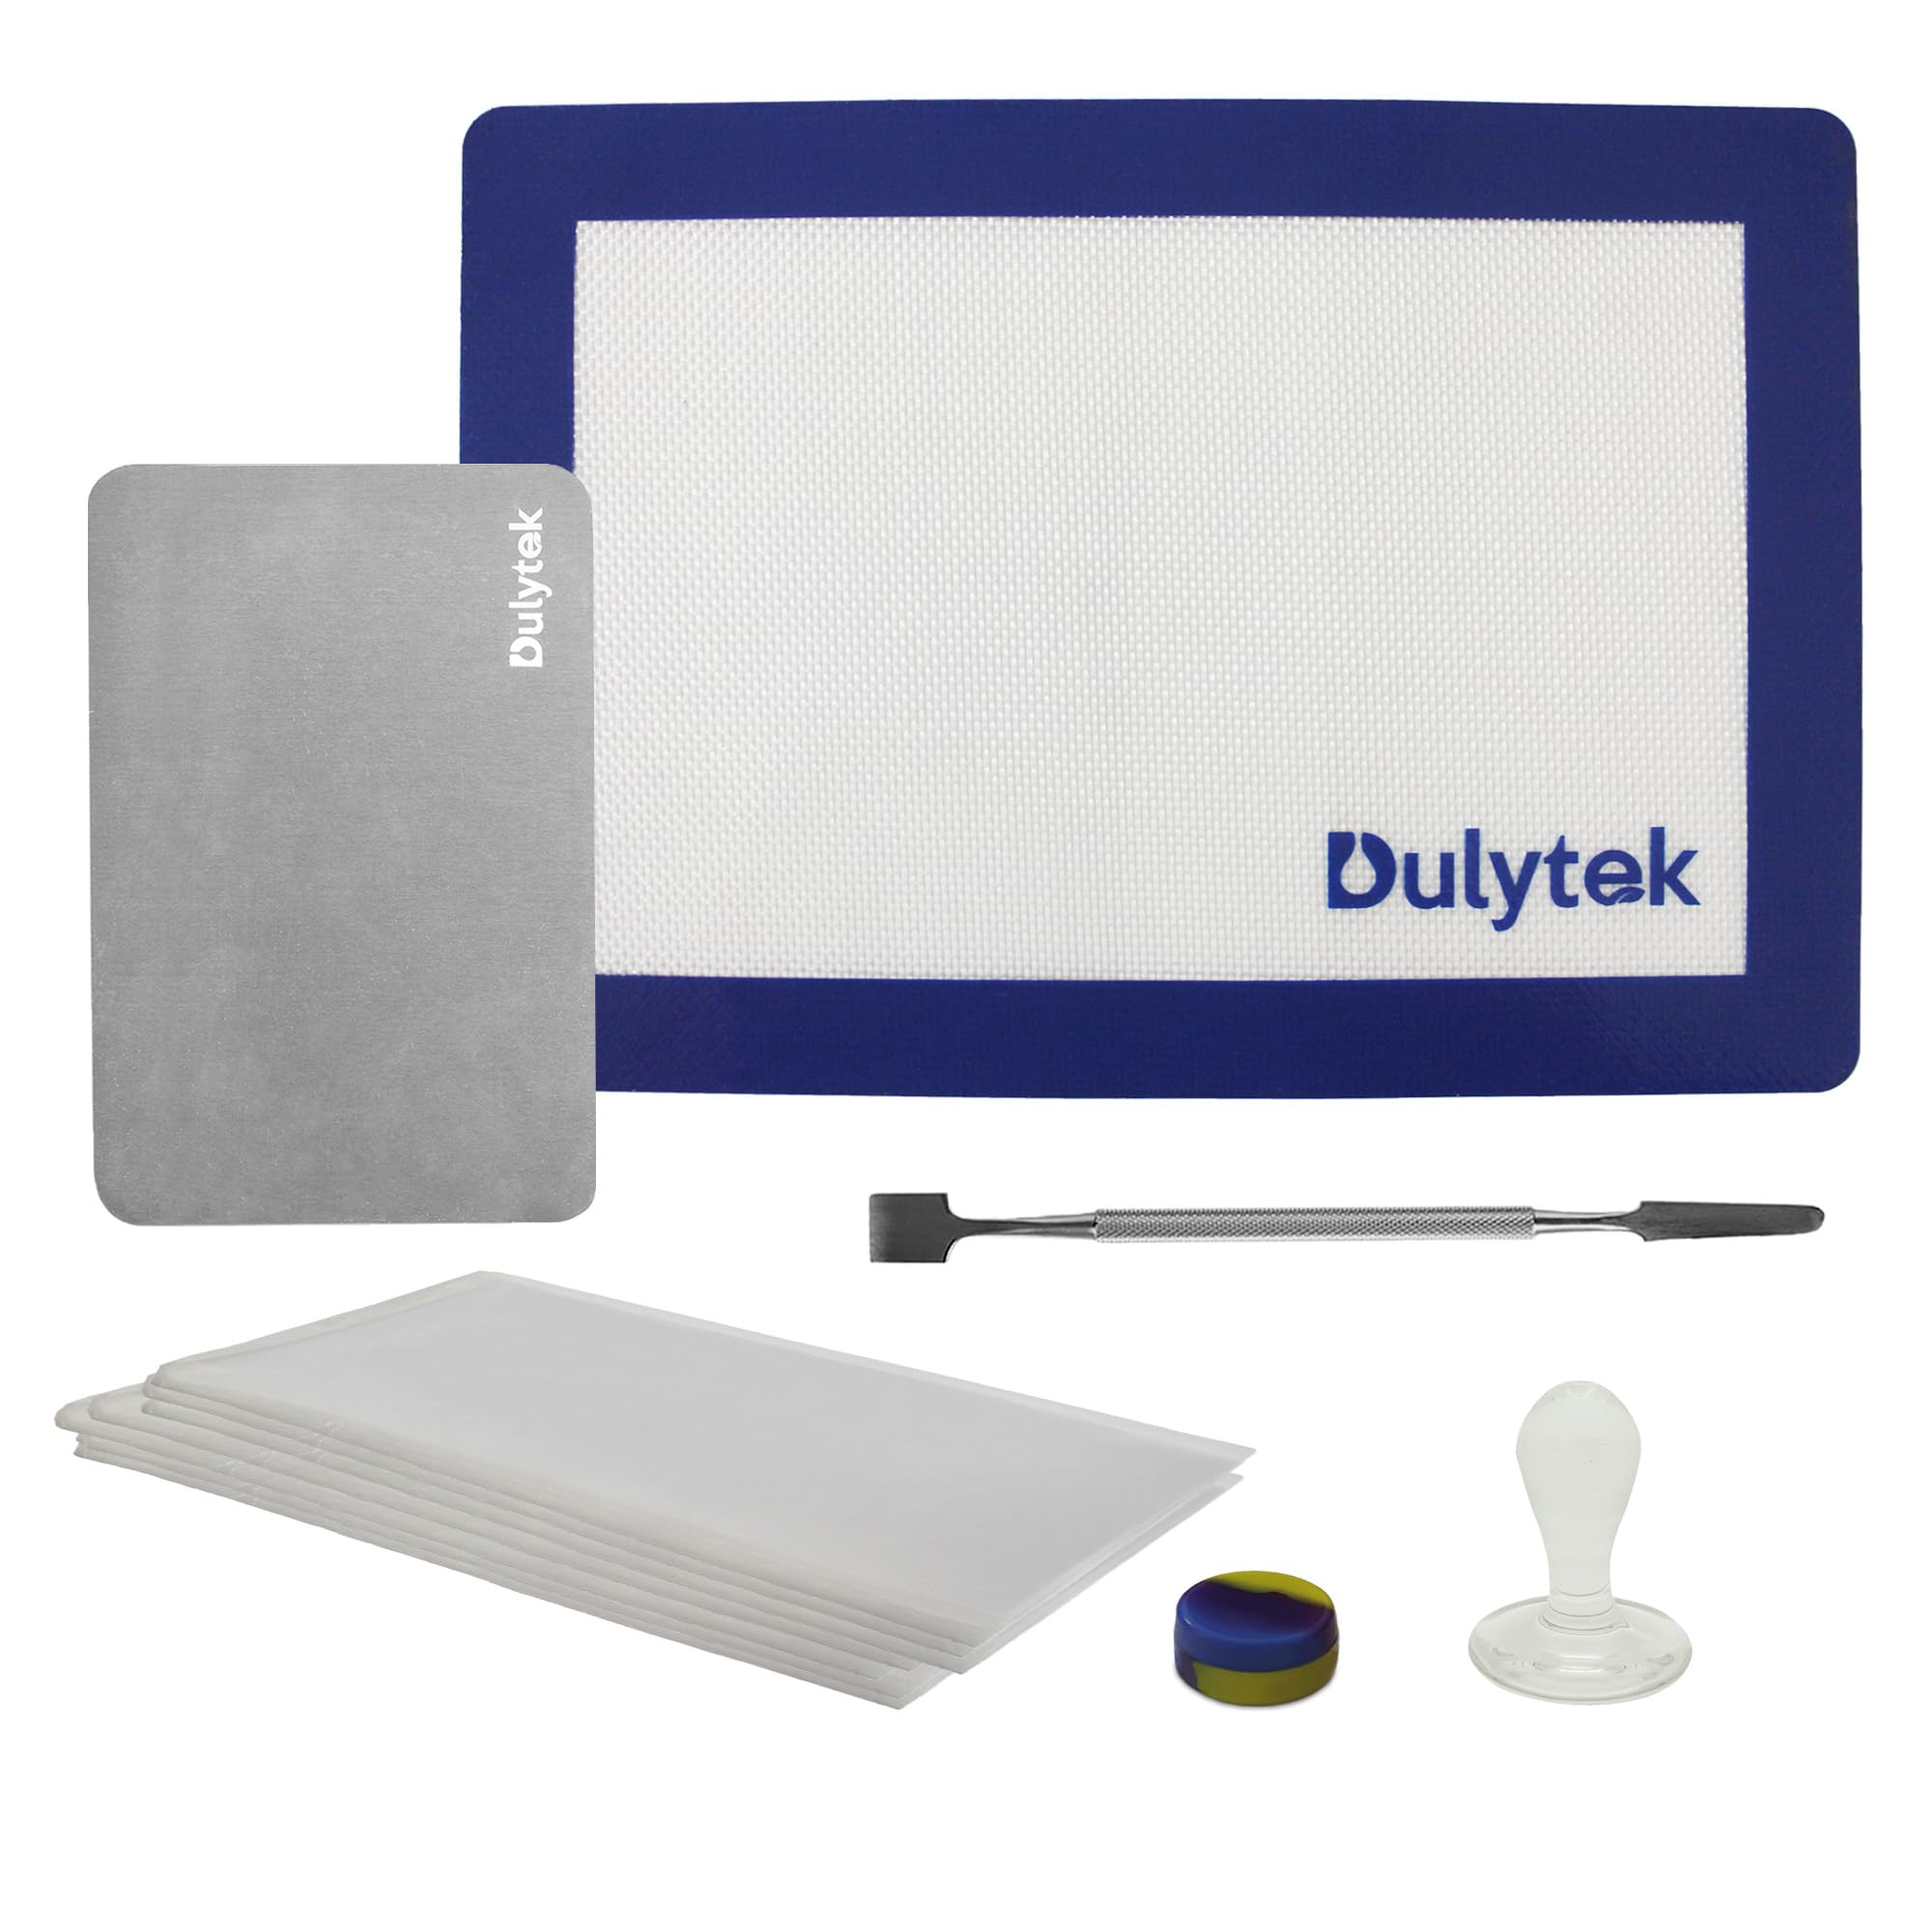 Dulytek Wax Collection Kit with 7 pcs Premium 2" x 4" 120 Micron Nylon Filter Bags